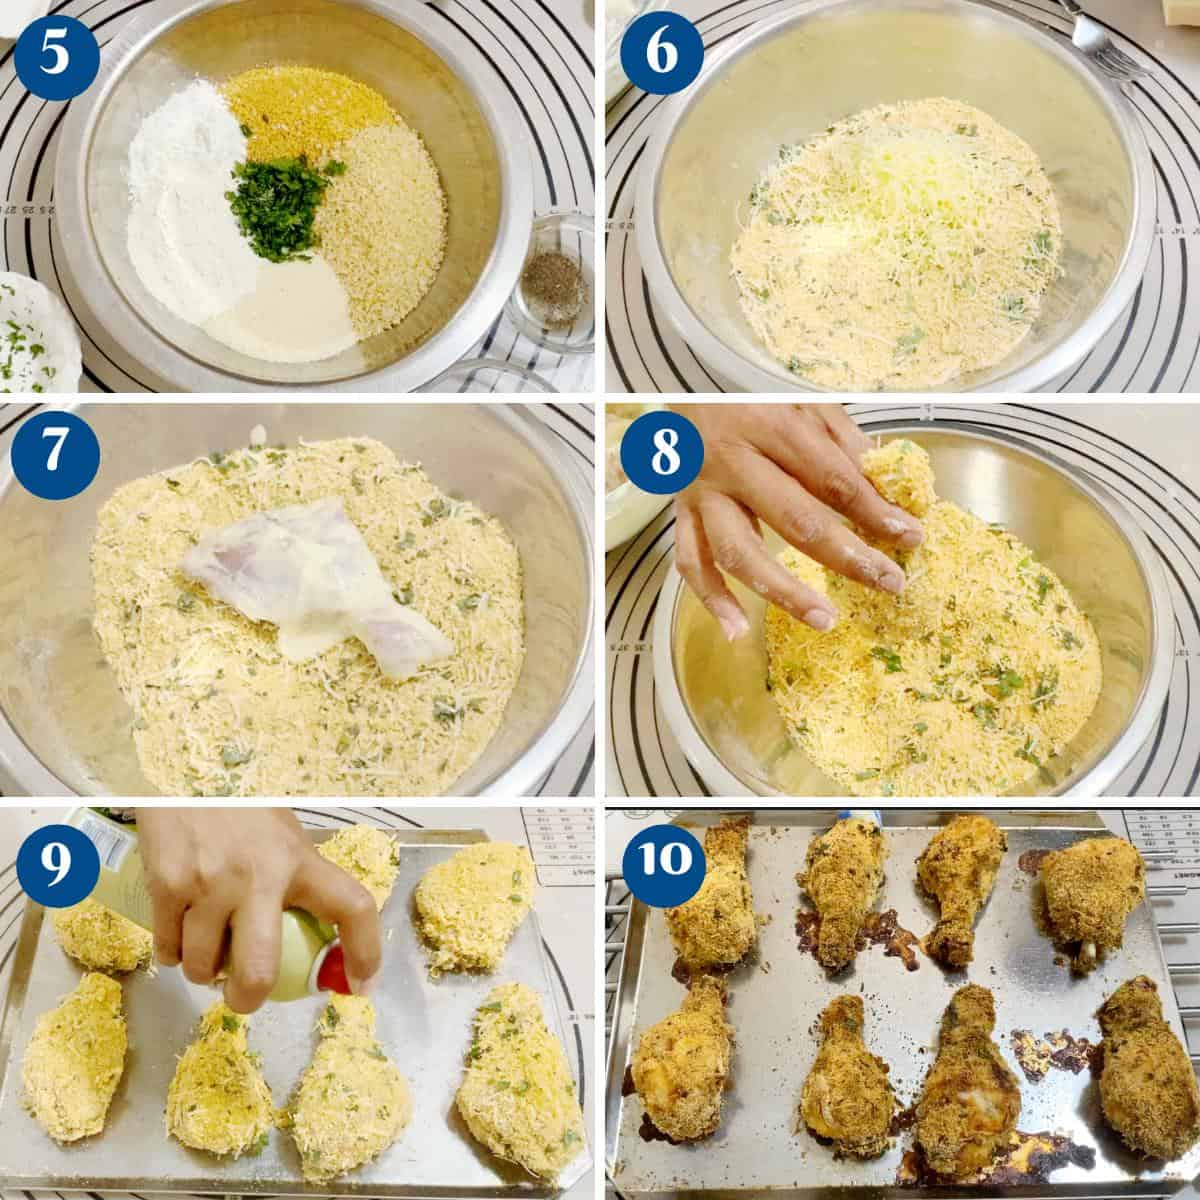 Progress pictures for baking crispy chicken.